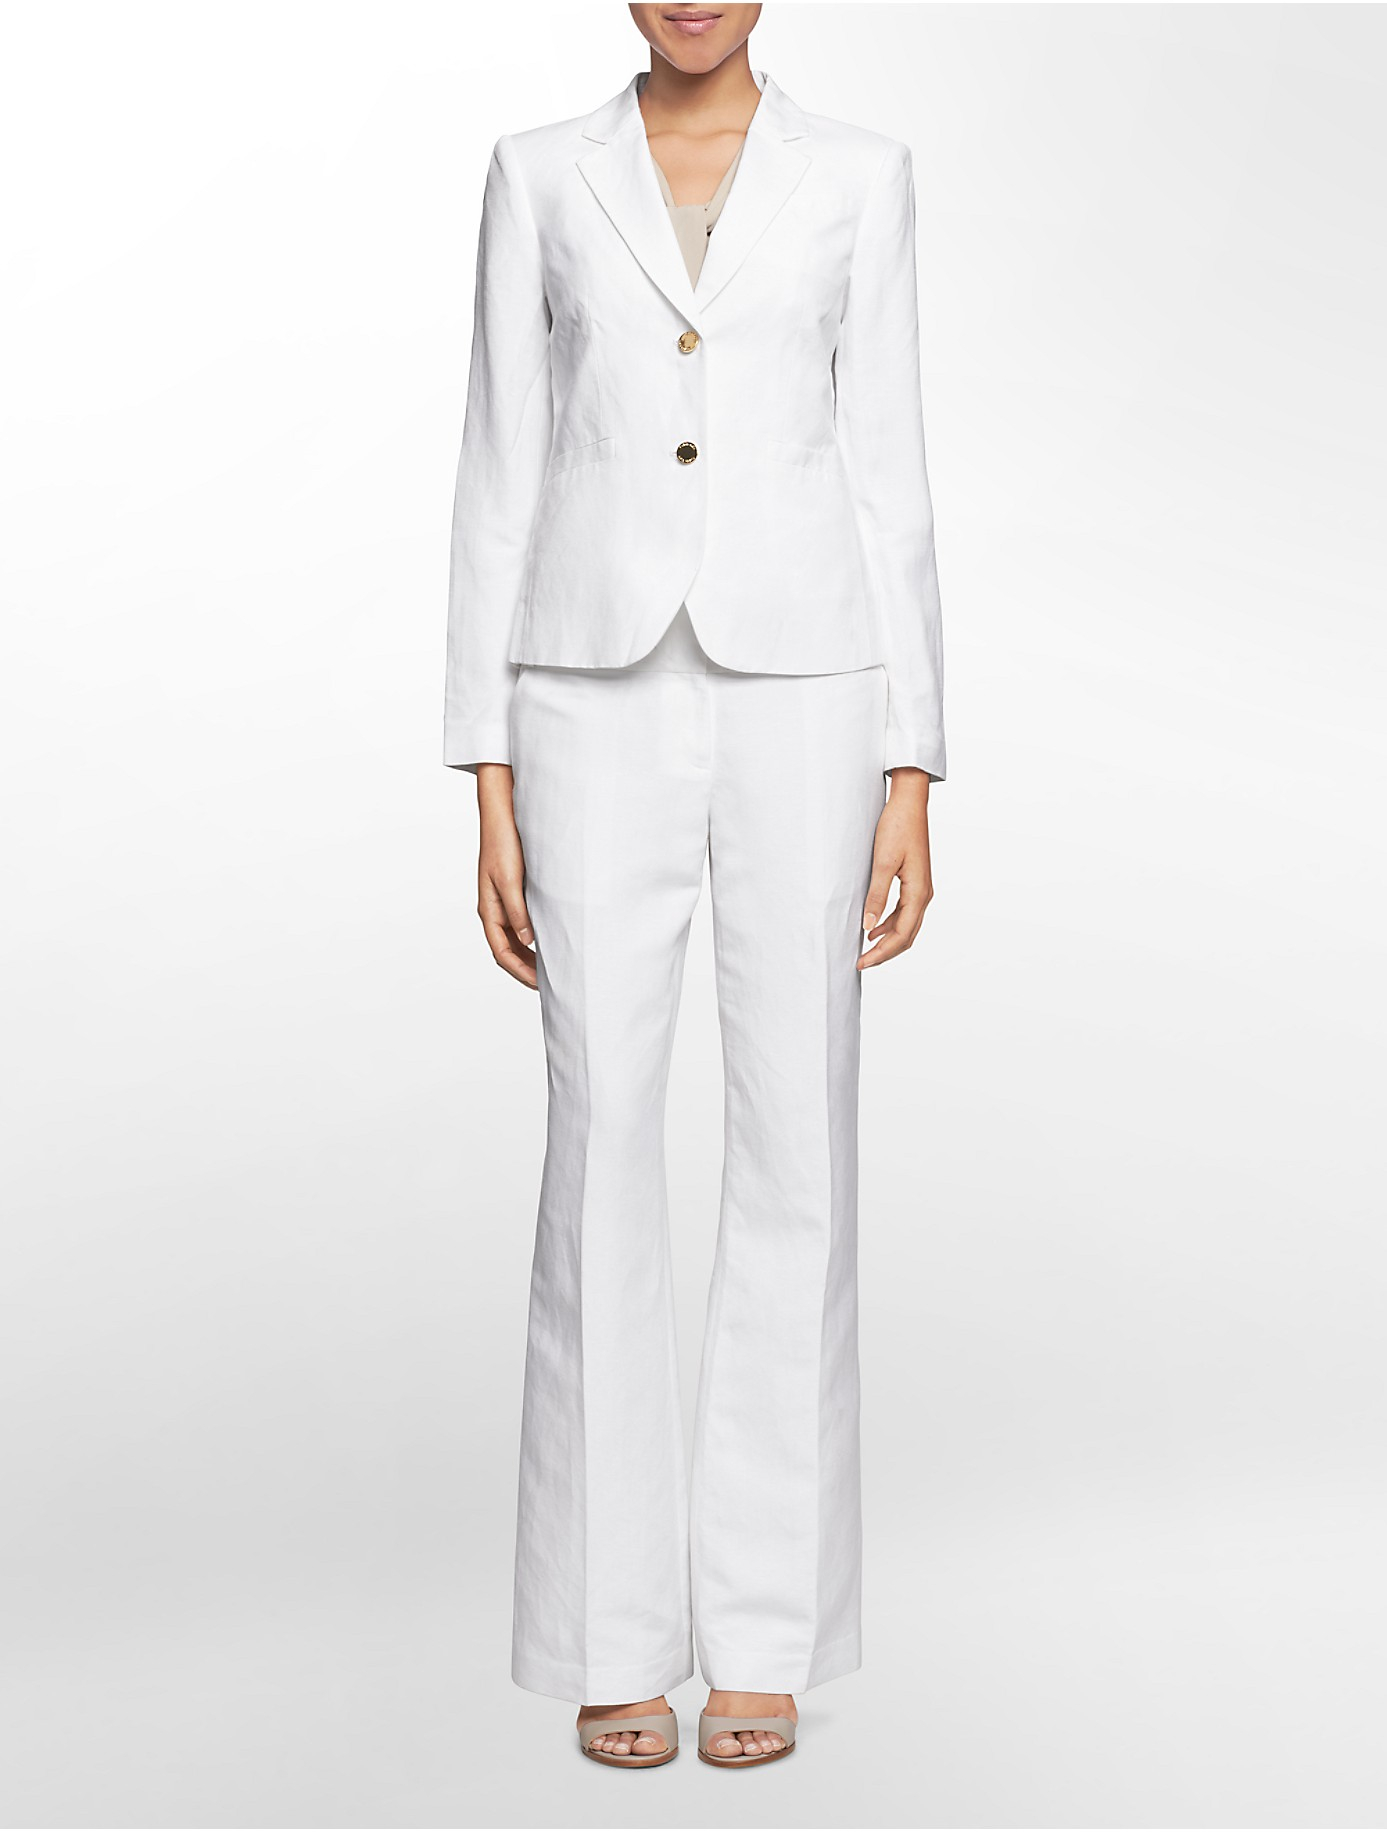 calvin klein women's white blazer Shop Clothing & Shoes Online